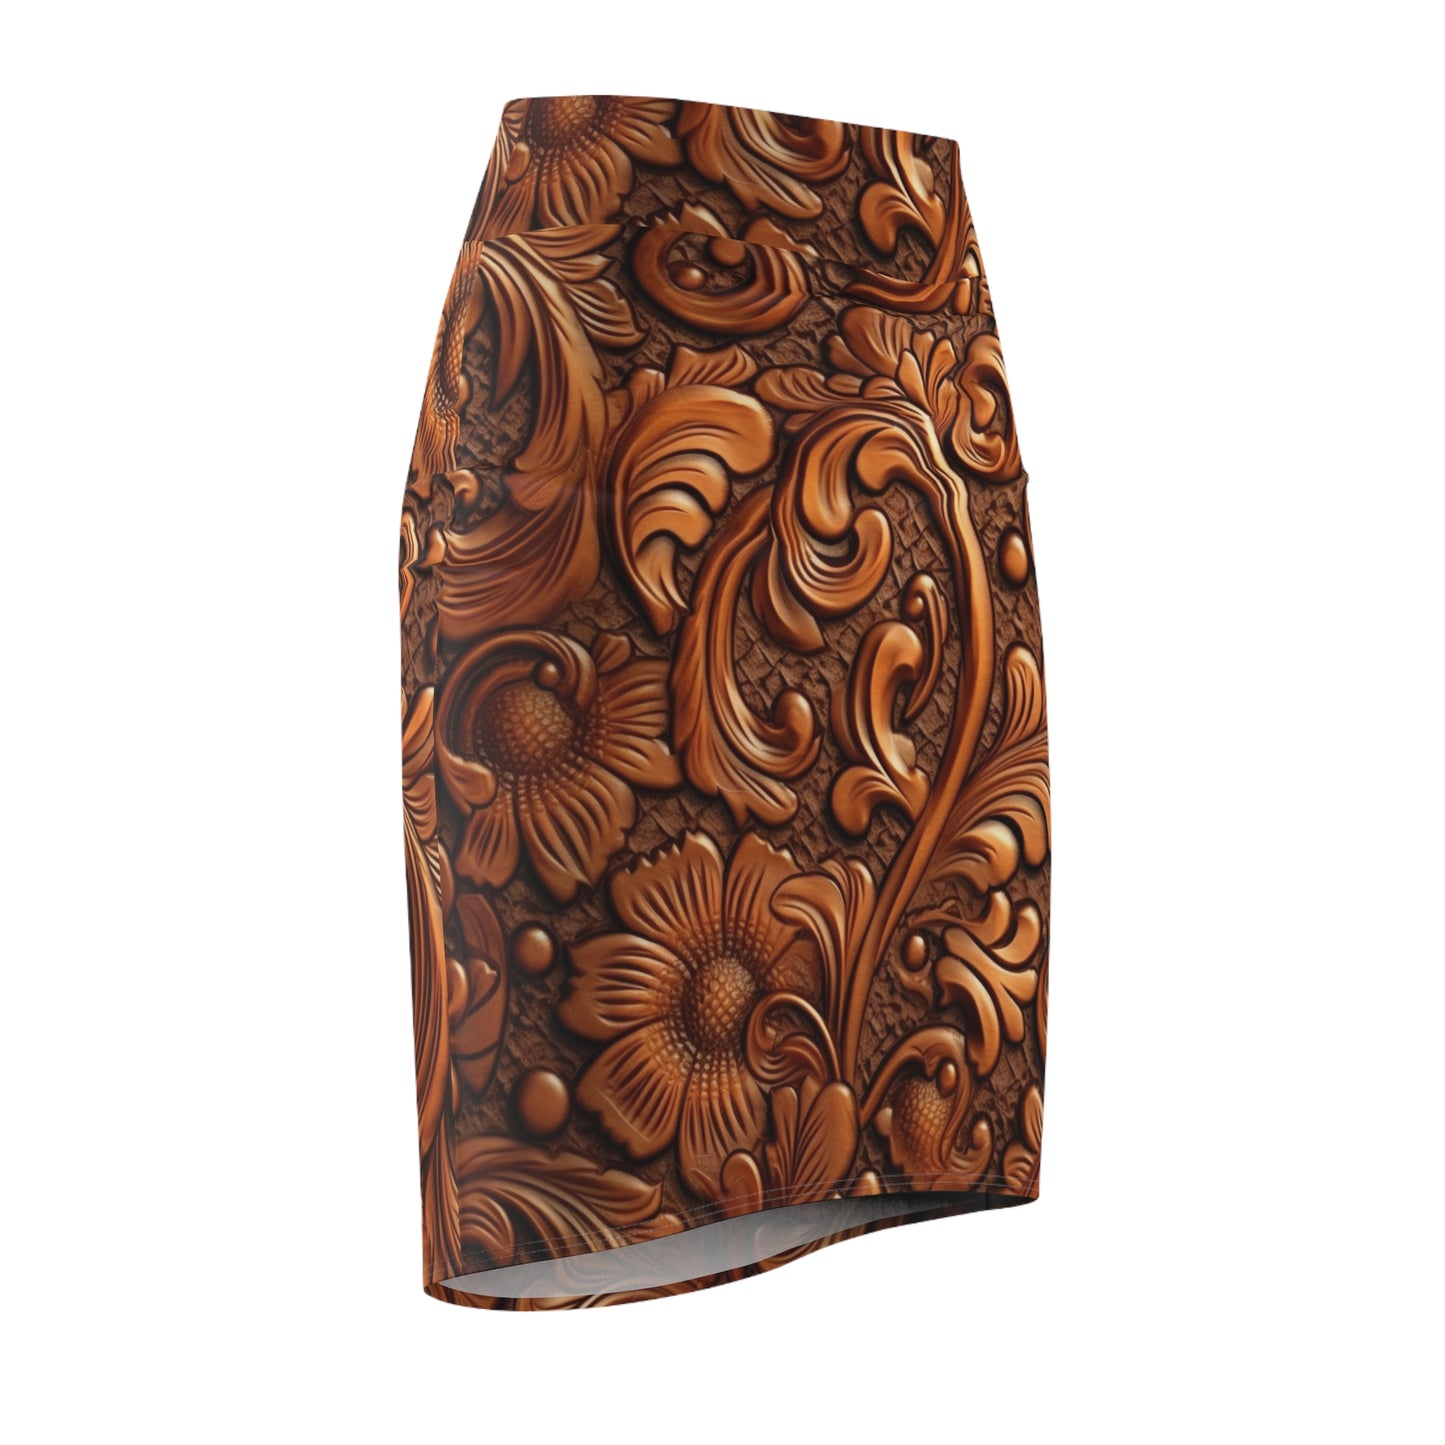 Leather Flower Cognac Classic Brown Timeless American Cowboy Design - Women's Pencil Skirt (AOP)